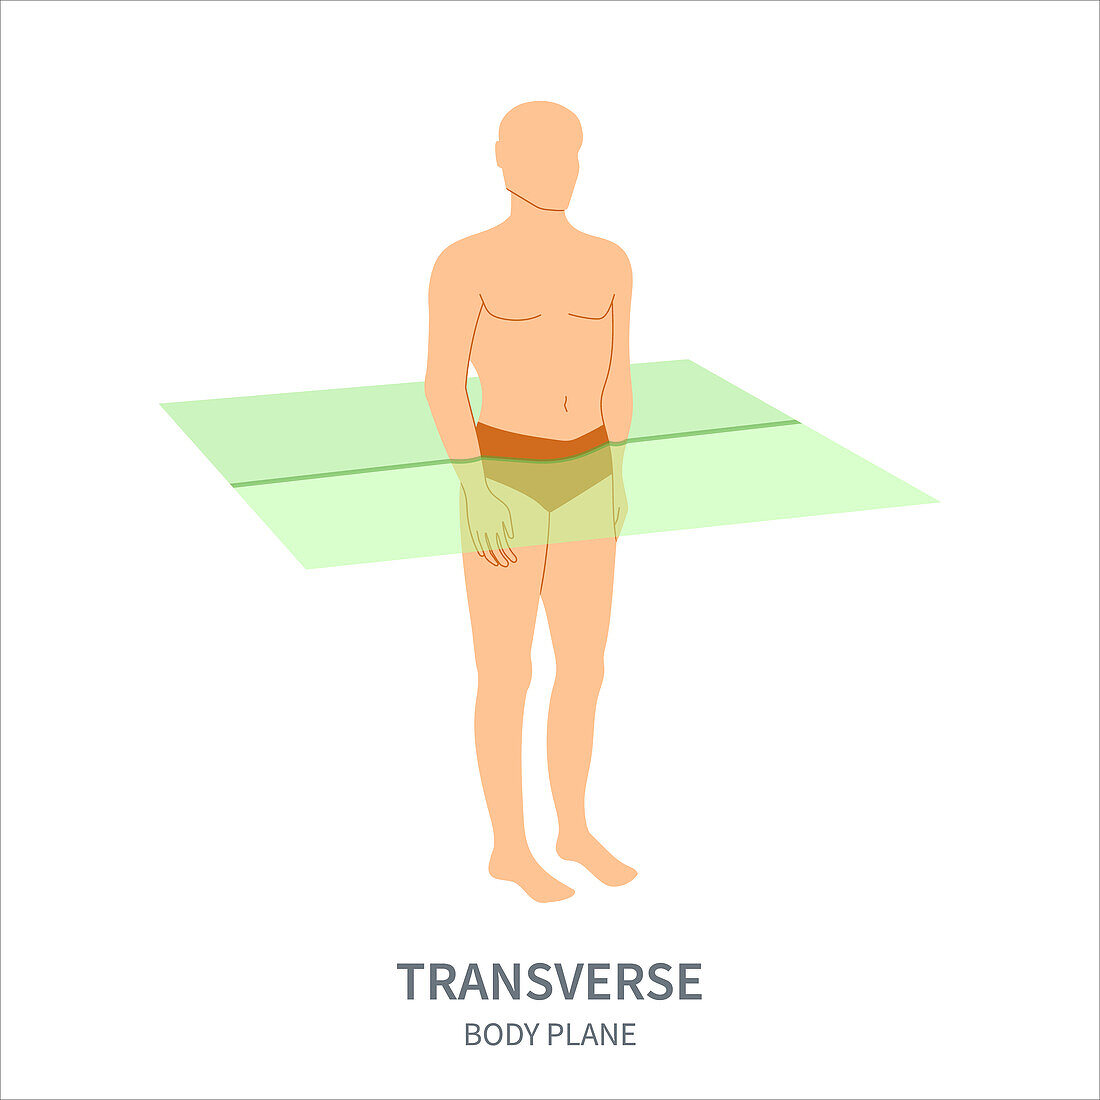 Transverse body plane, illustration